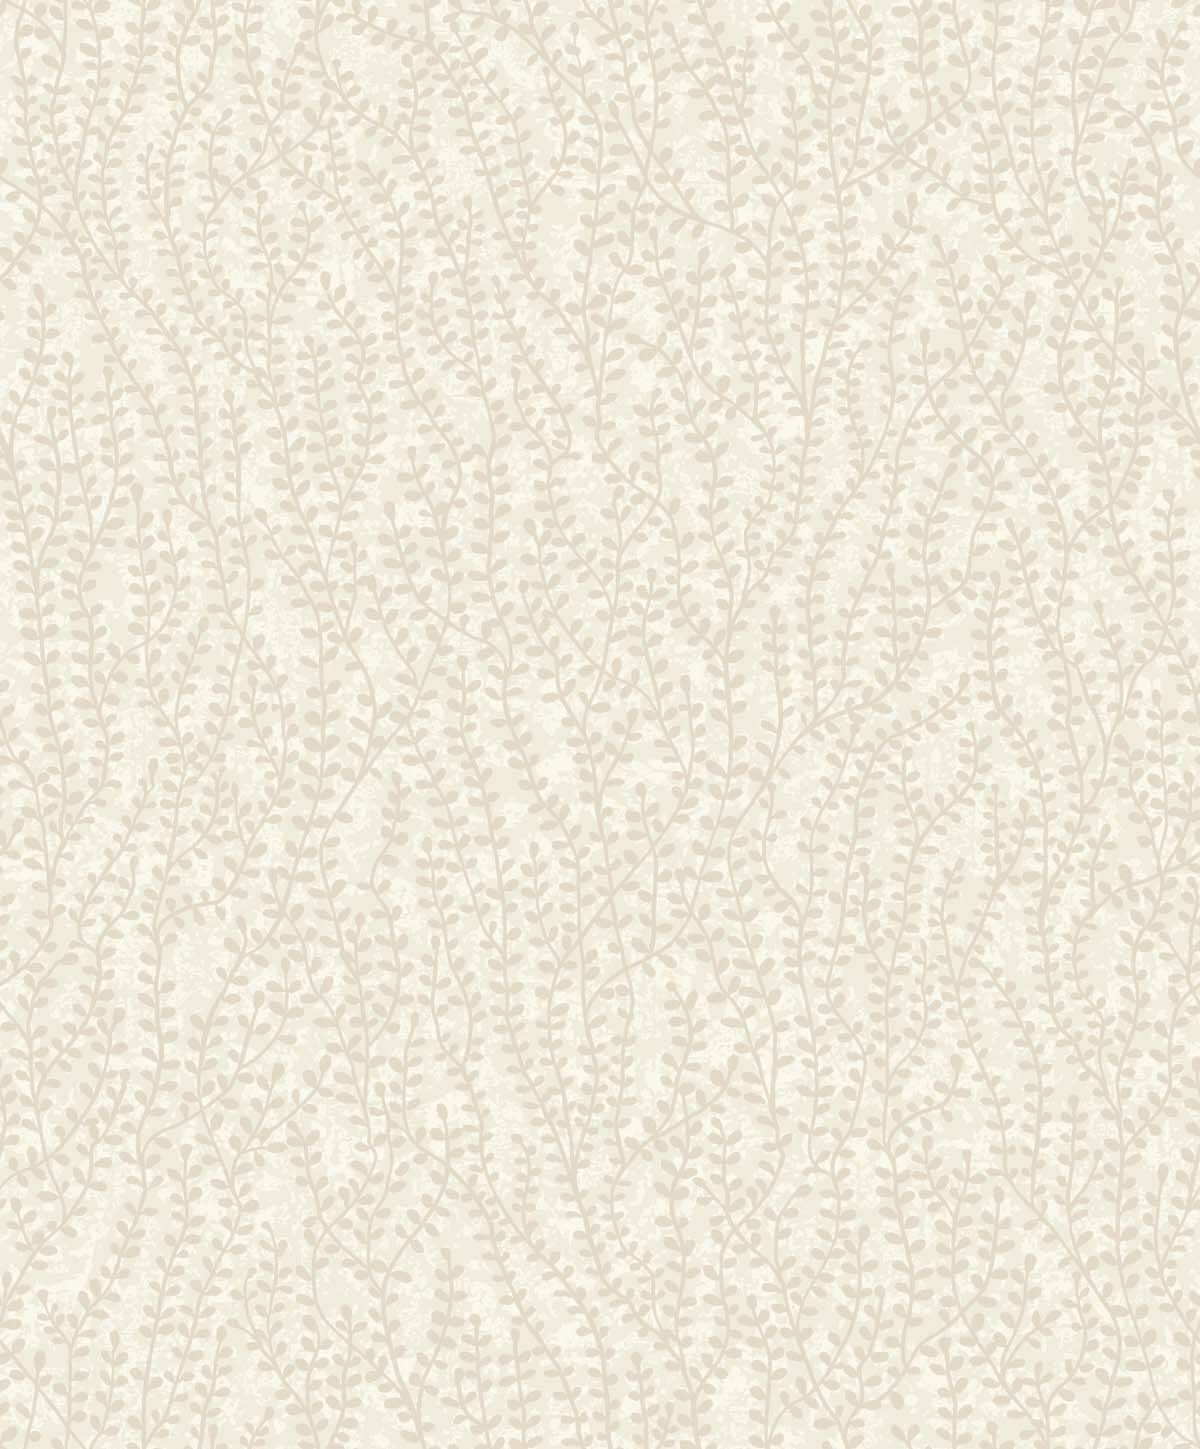 Seabrook White Heron Seaweed Branches Wallpaper - Off White Satin